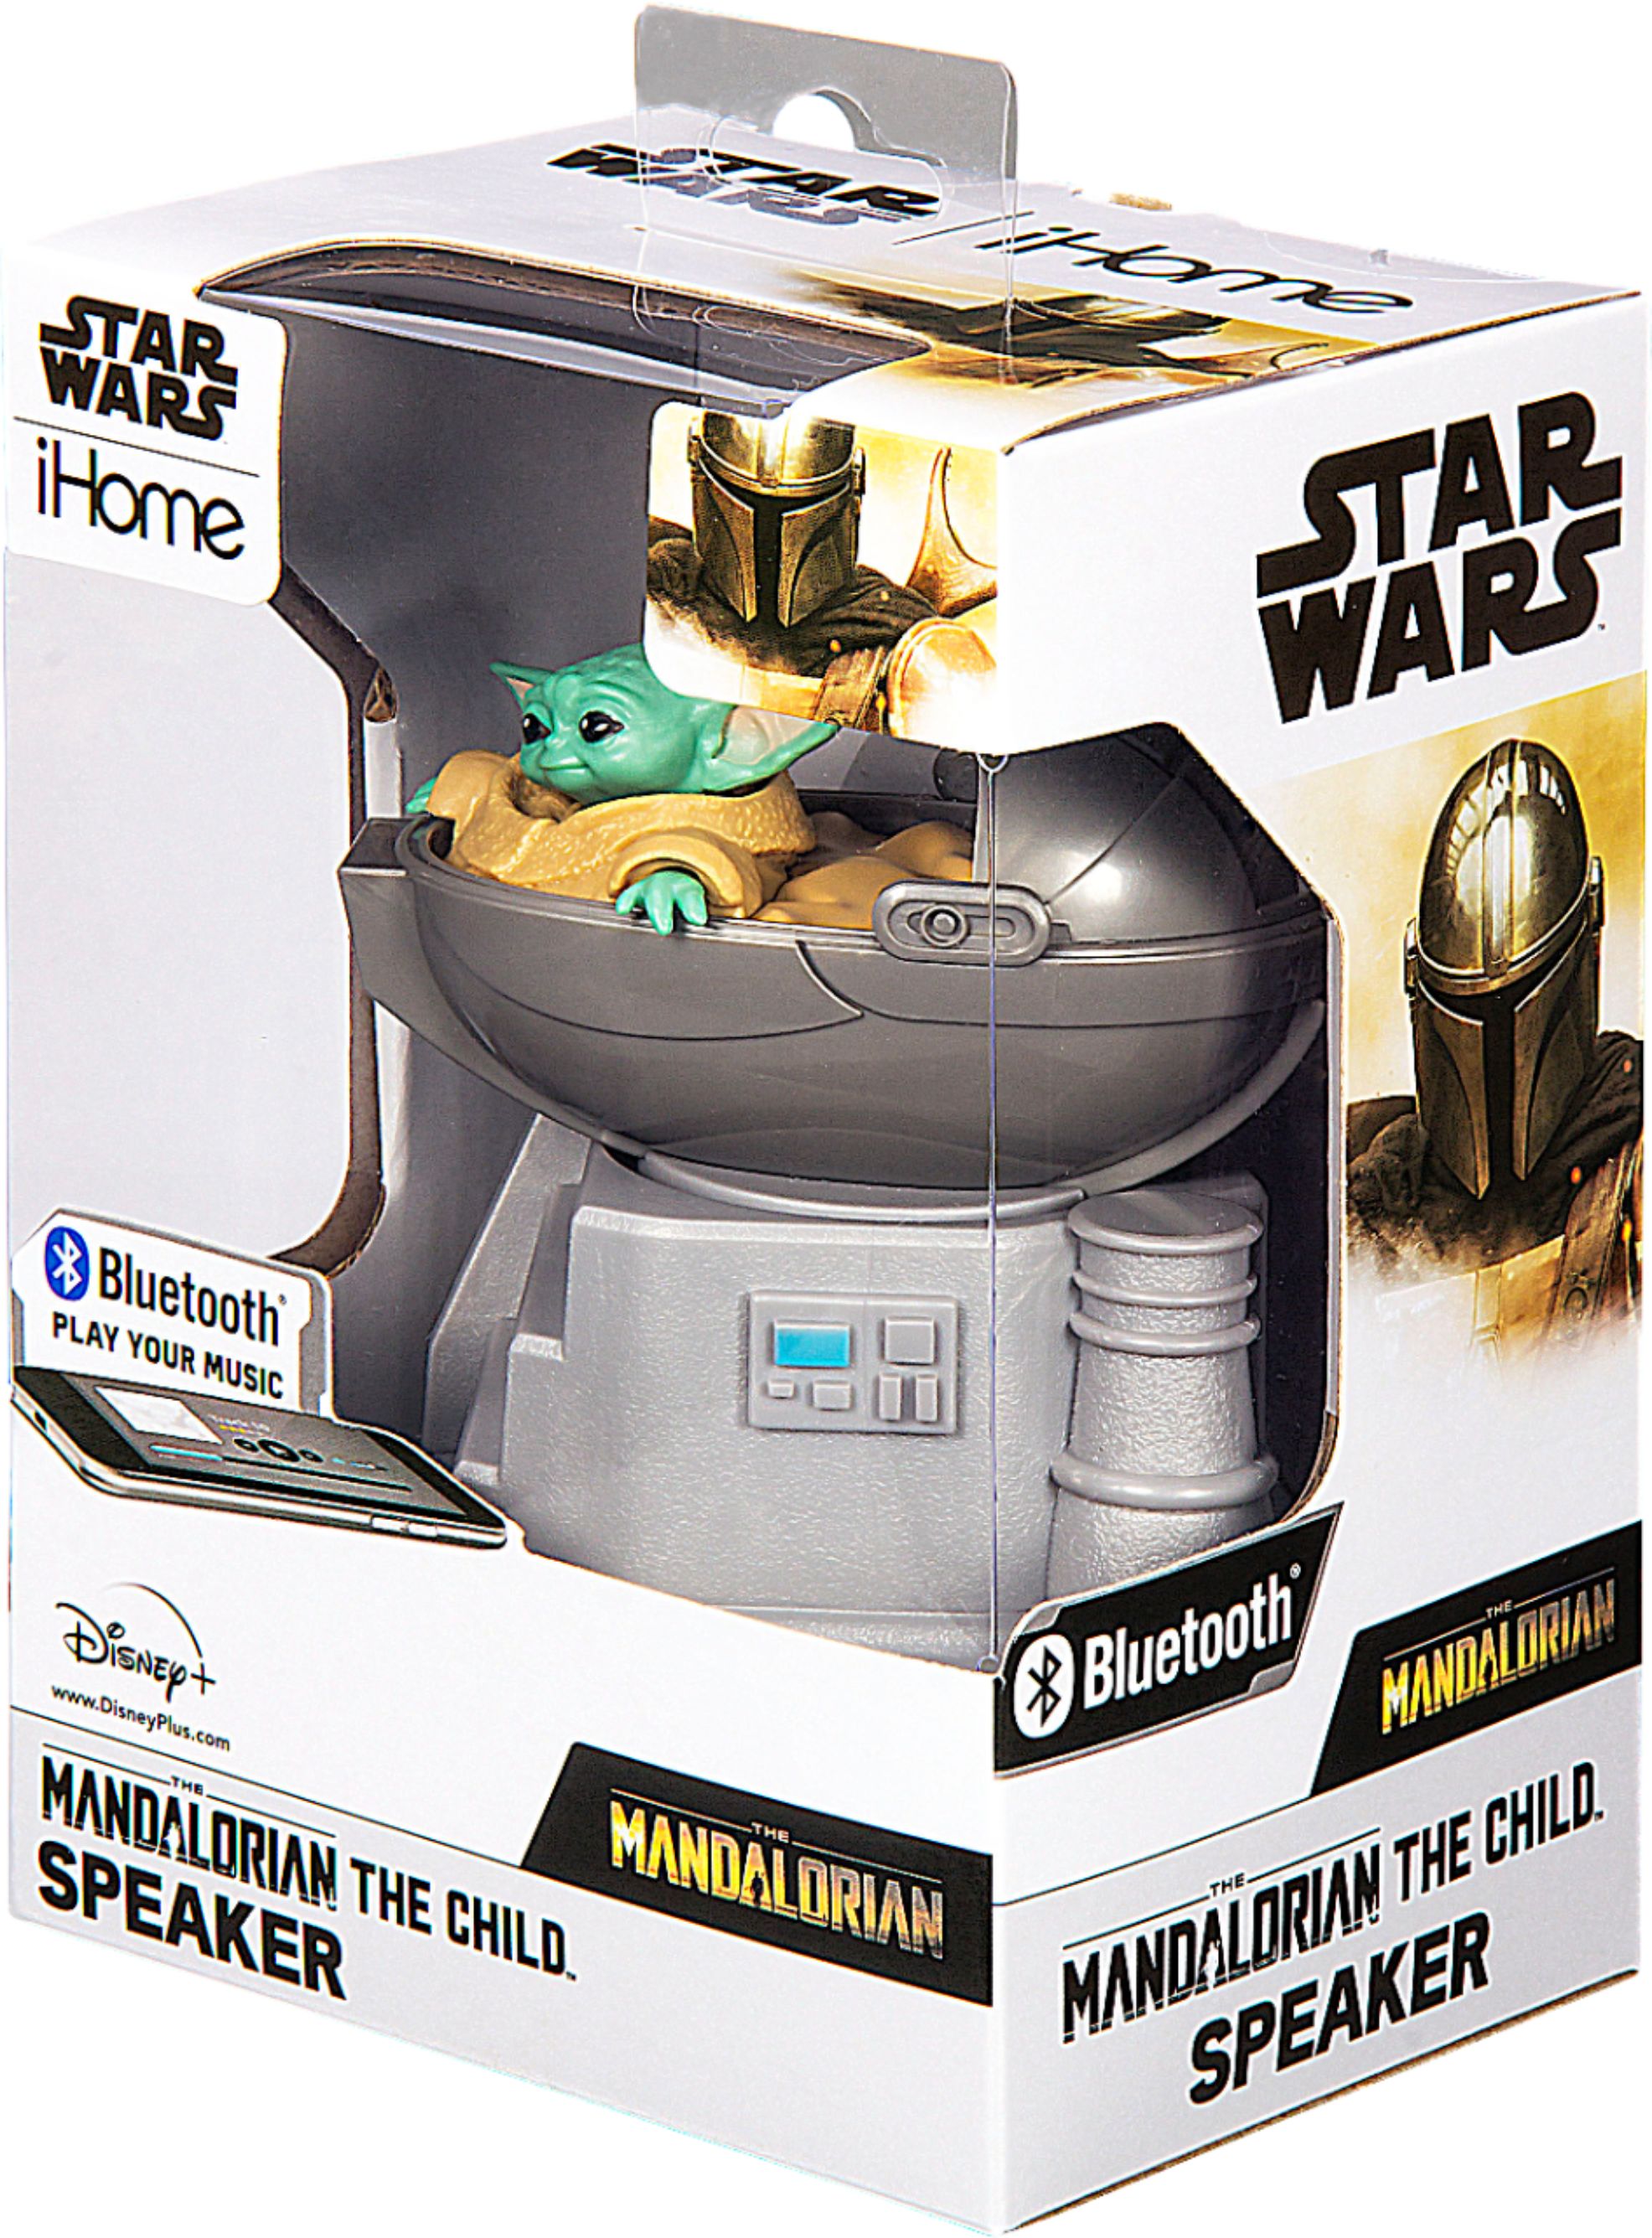 iHome The Child "Baby Yoda" Bluetooth Speaker The Mandalorian Star Wars Speaker 